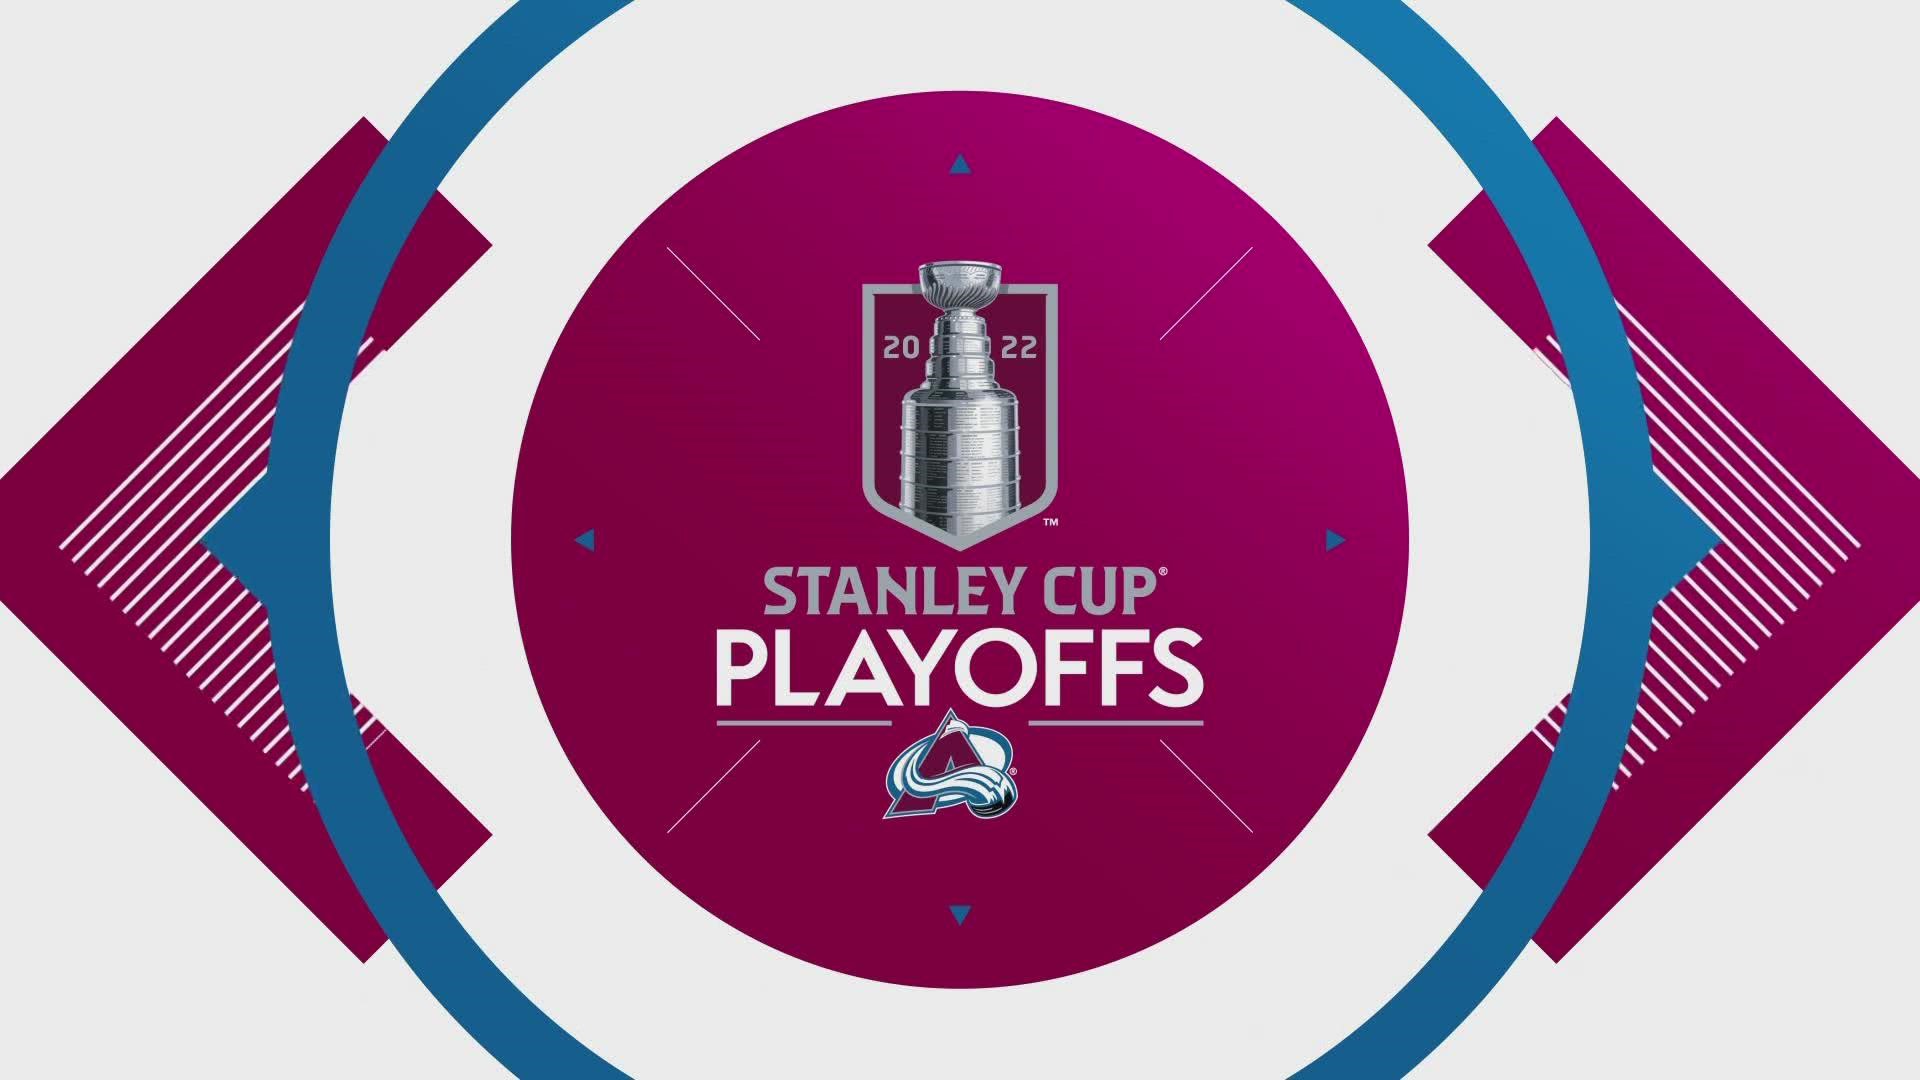 NHL Playoffs: Colorado Avalanche second round schedule released